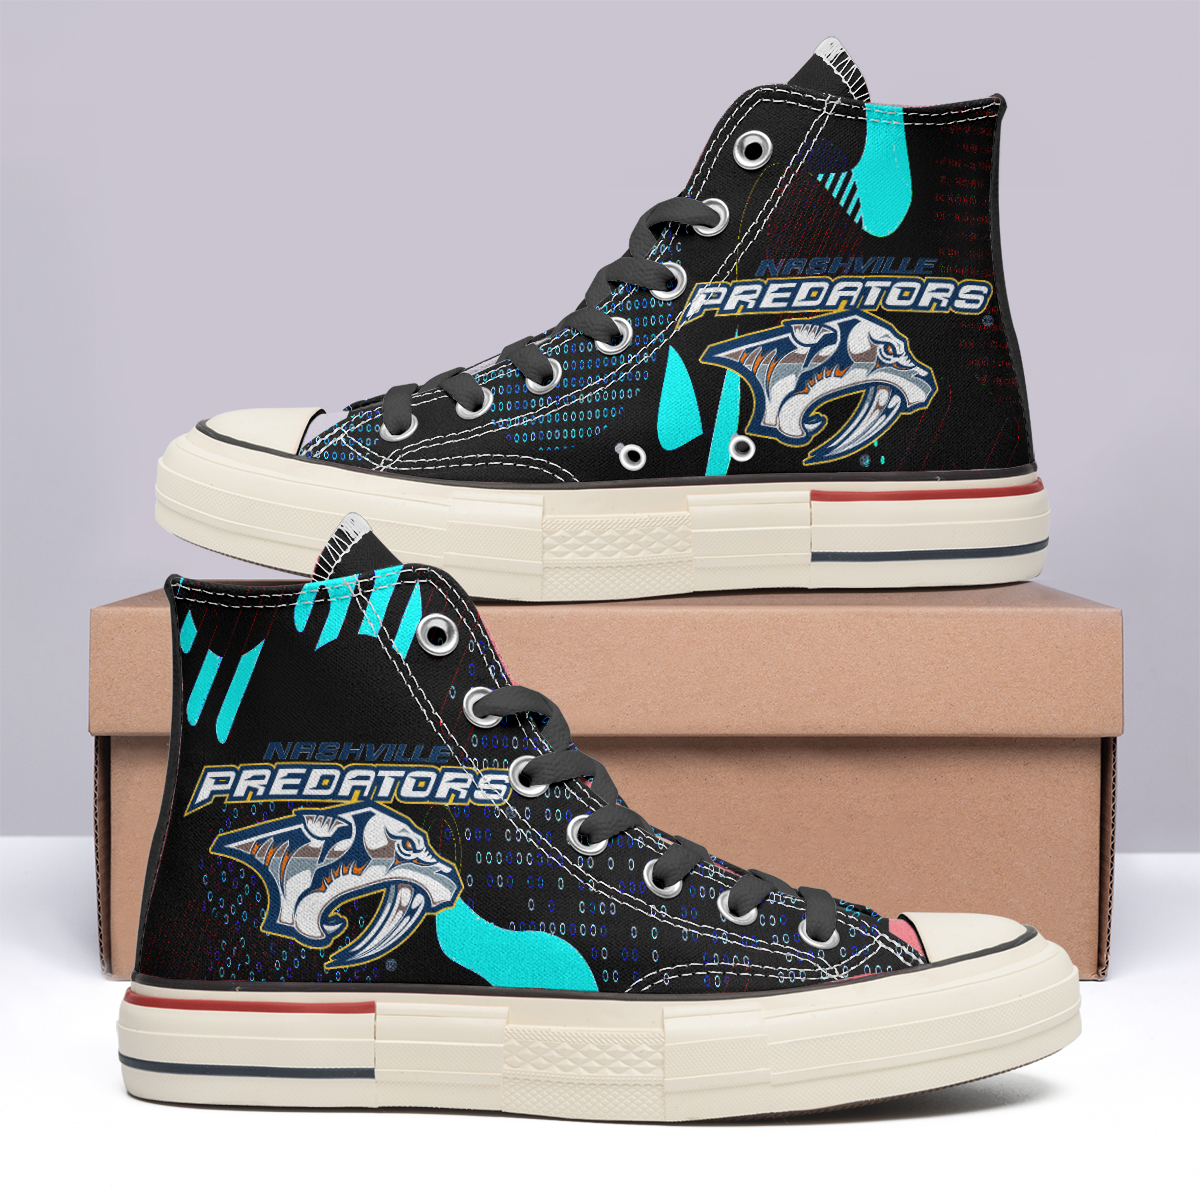 Nashville Predators High Top Canvas Shoes Special Edition